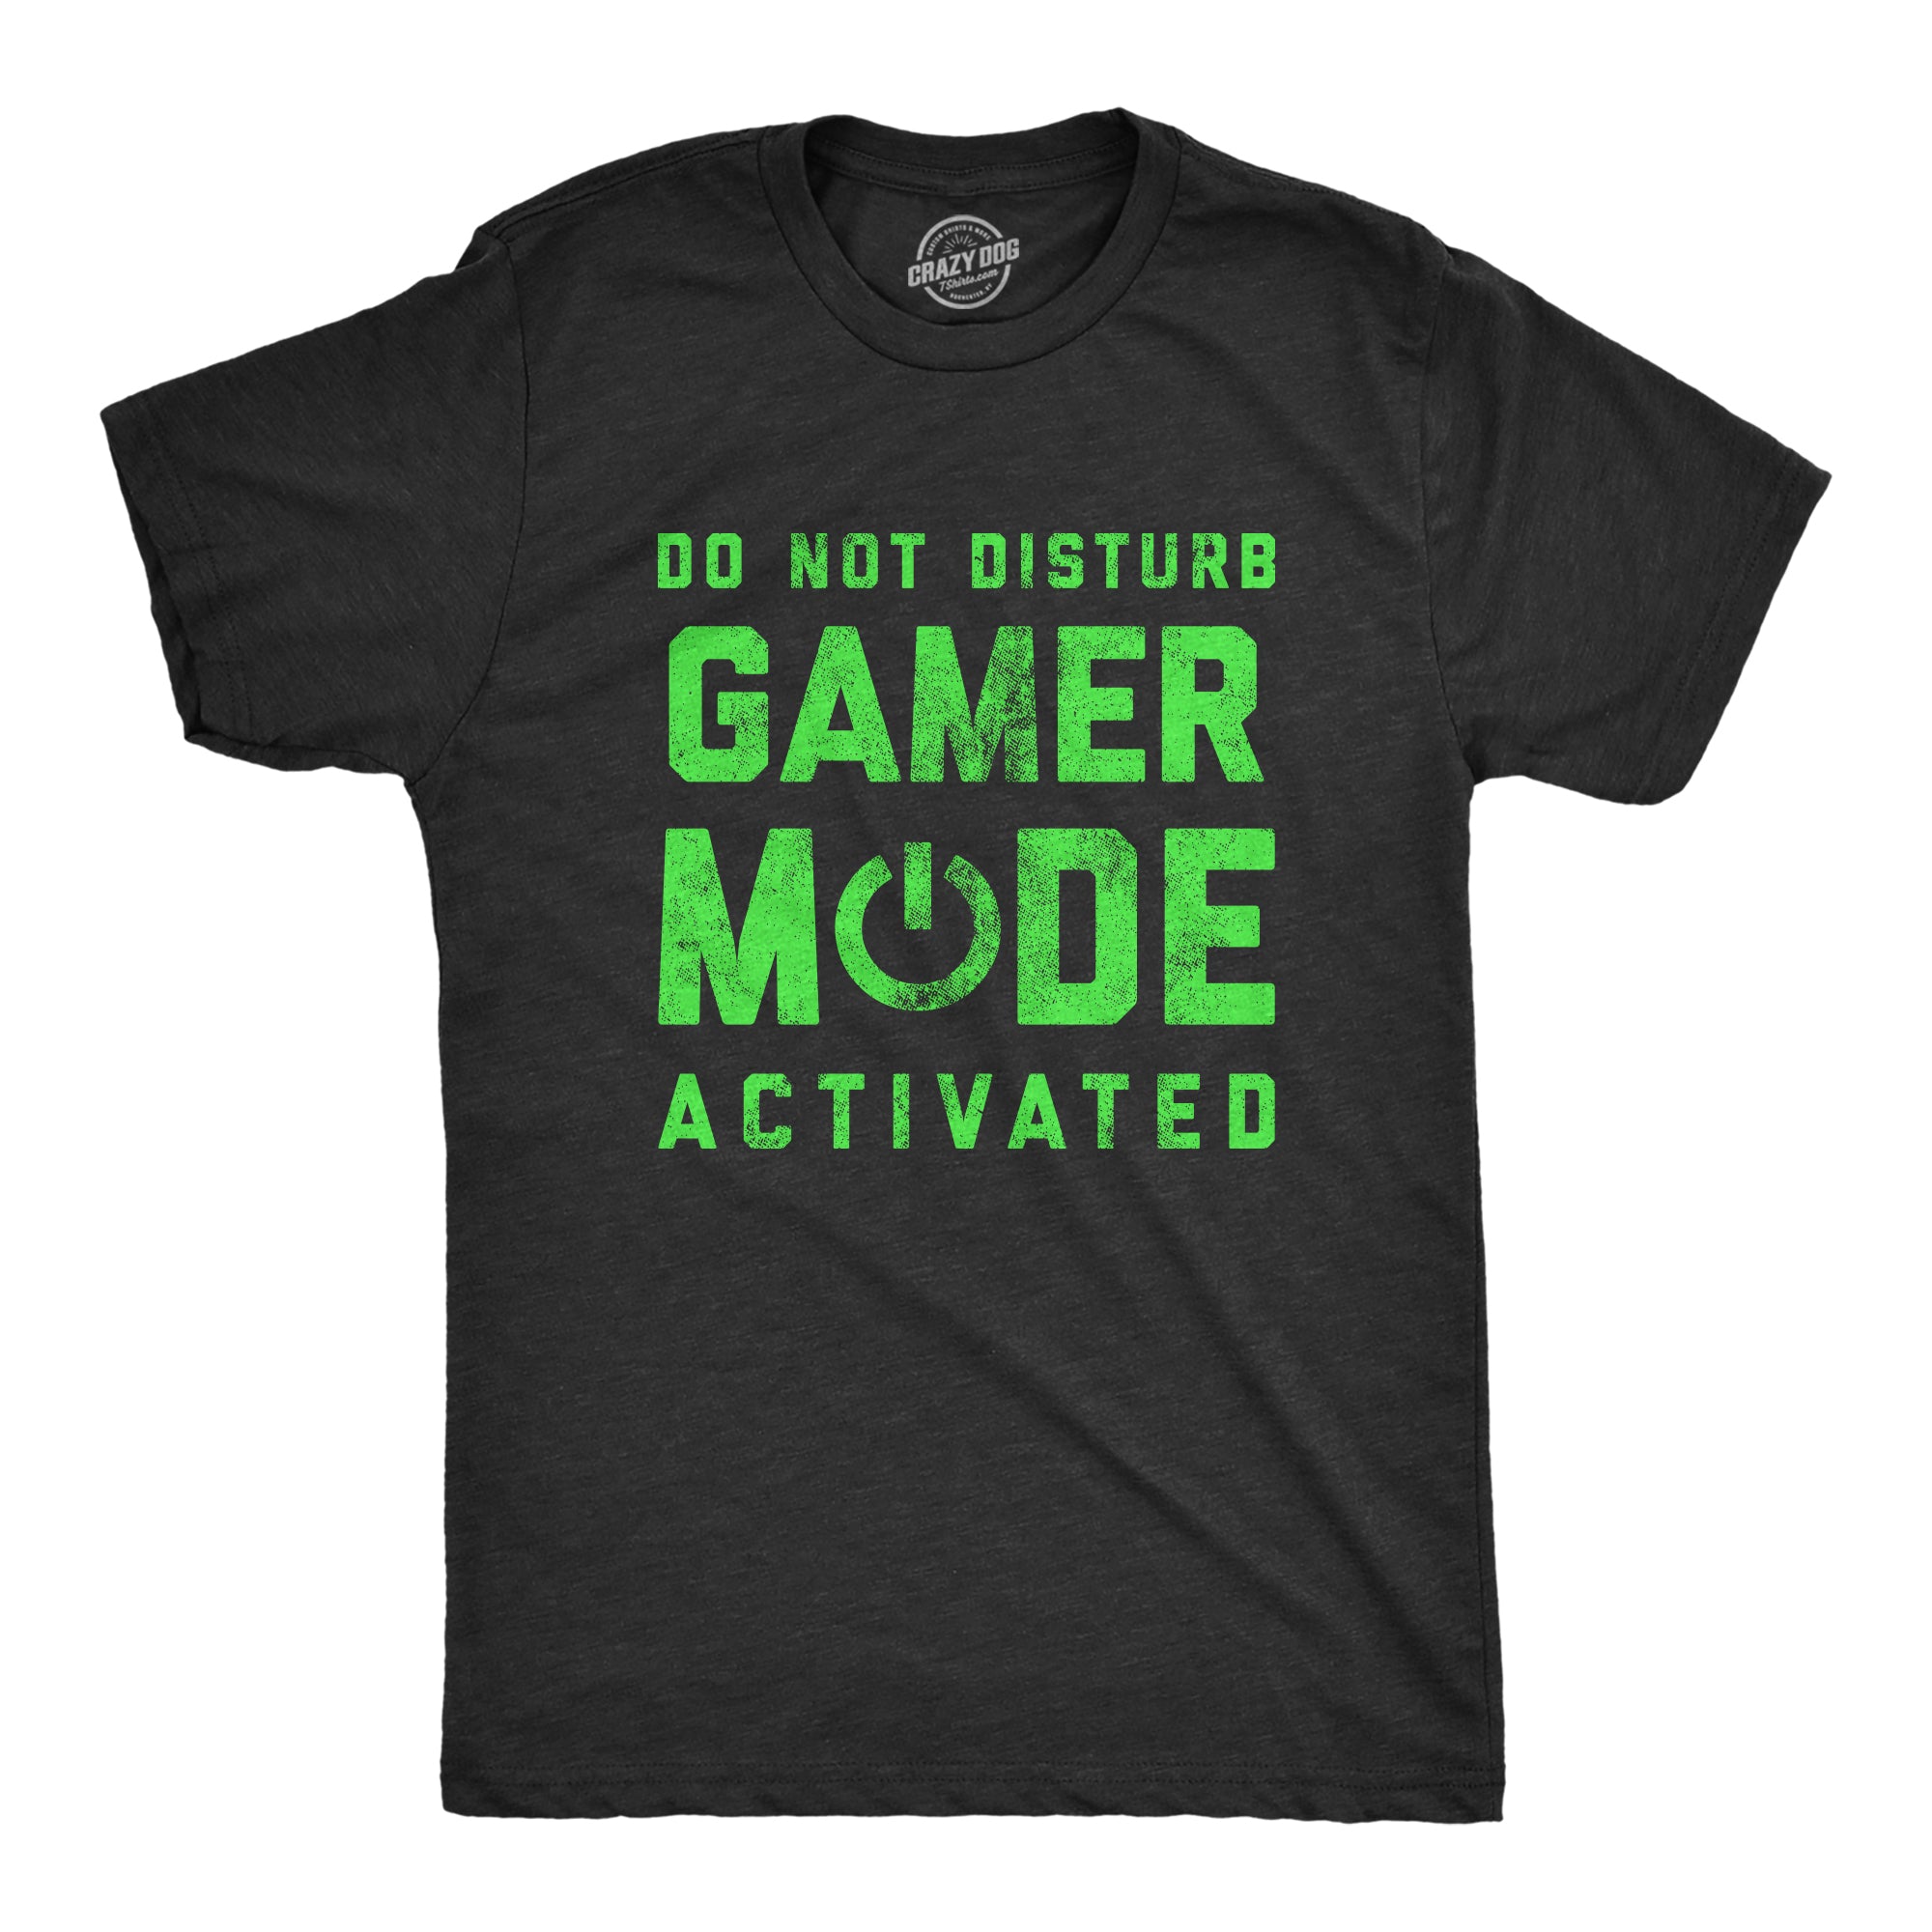 Funny Gamer T shirts, Video Gaming Tees